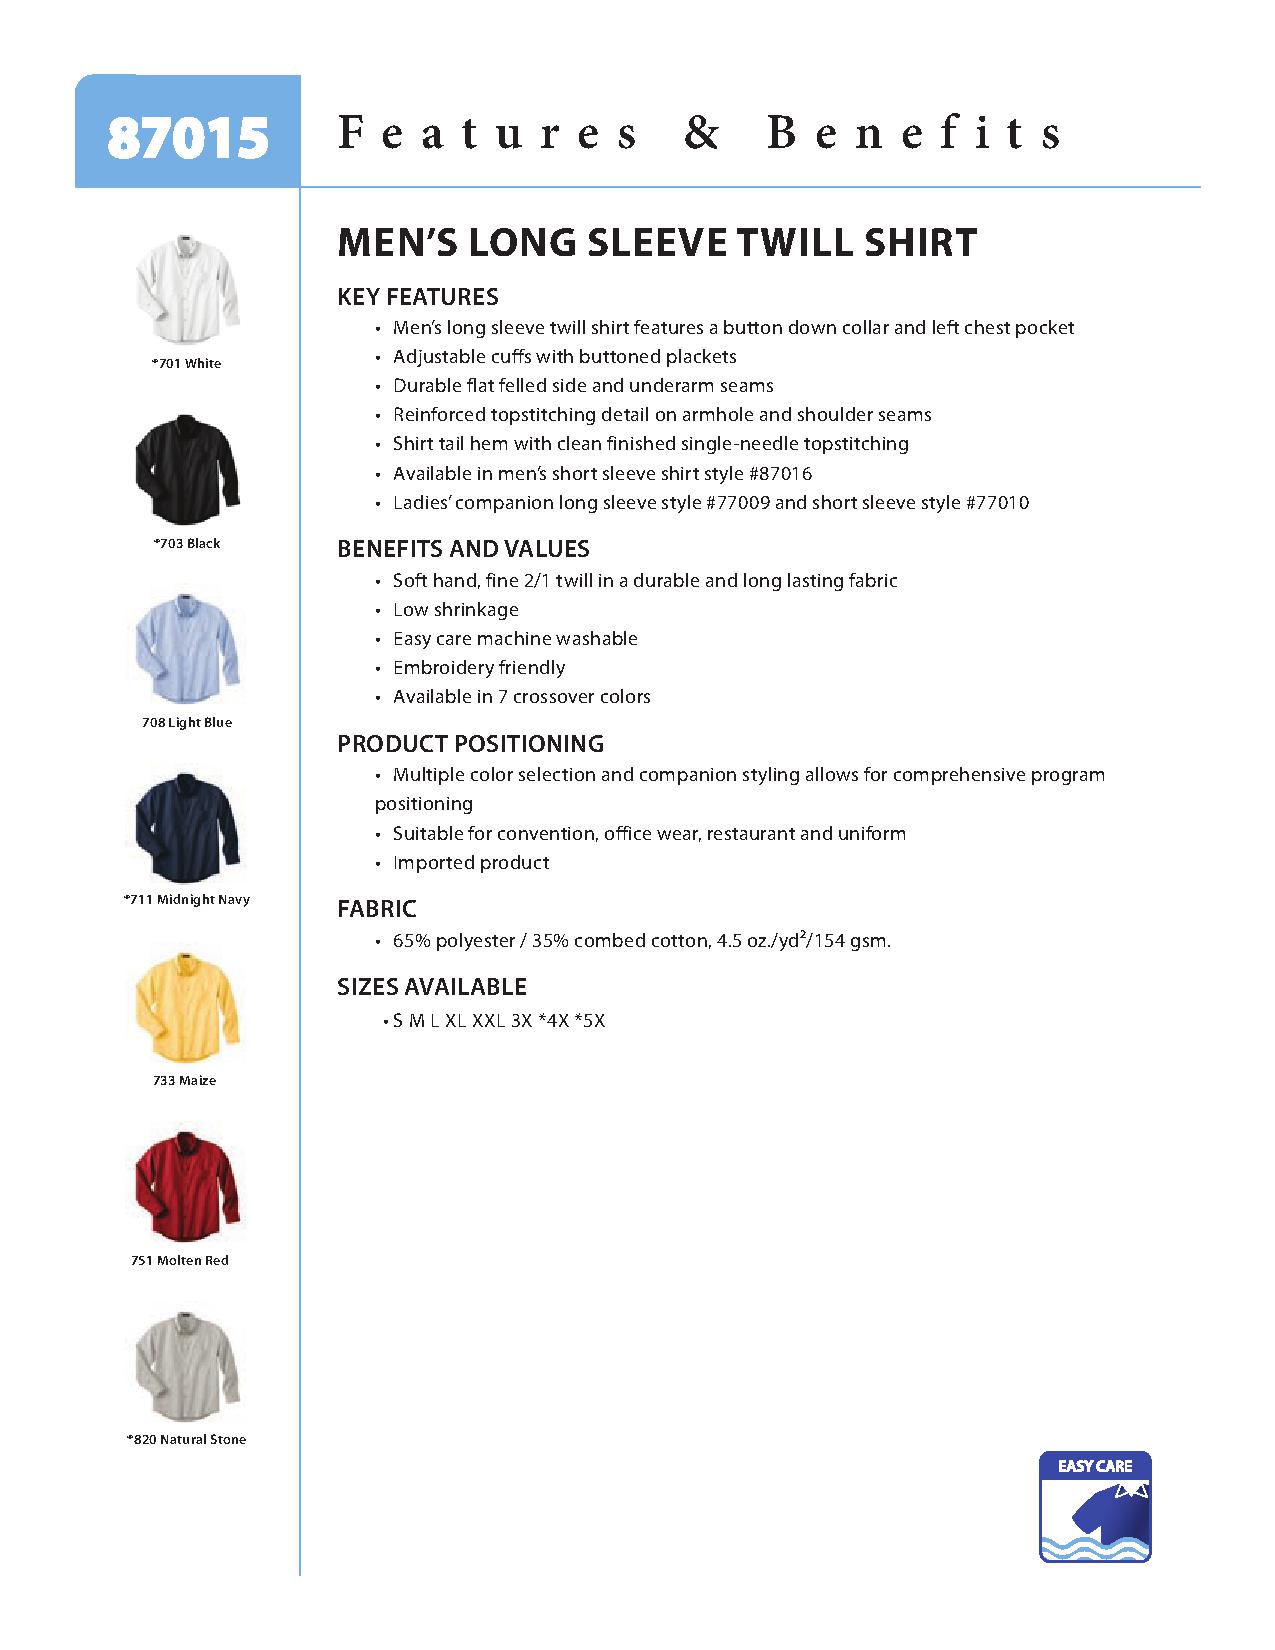 Ash City Easy care 87015 - Men's Long Sleeve Twill Shirt